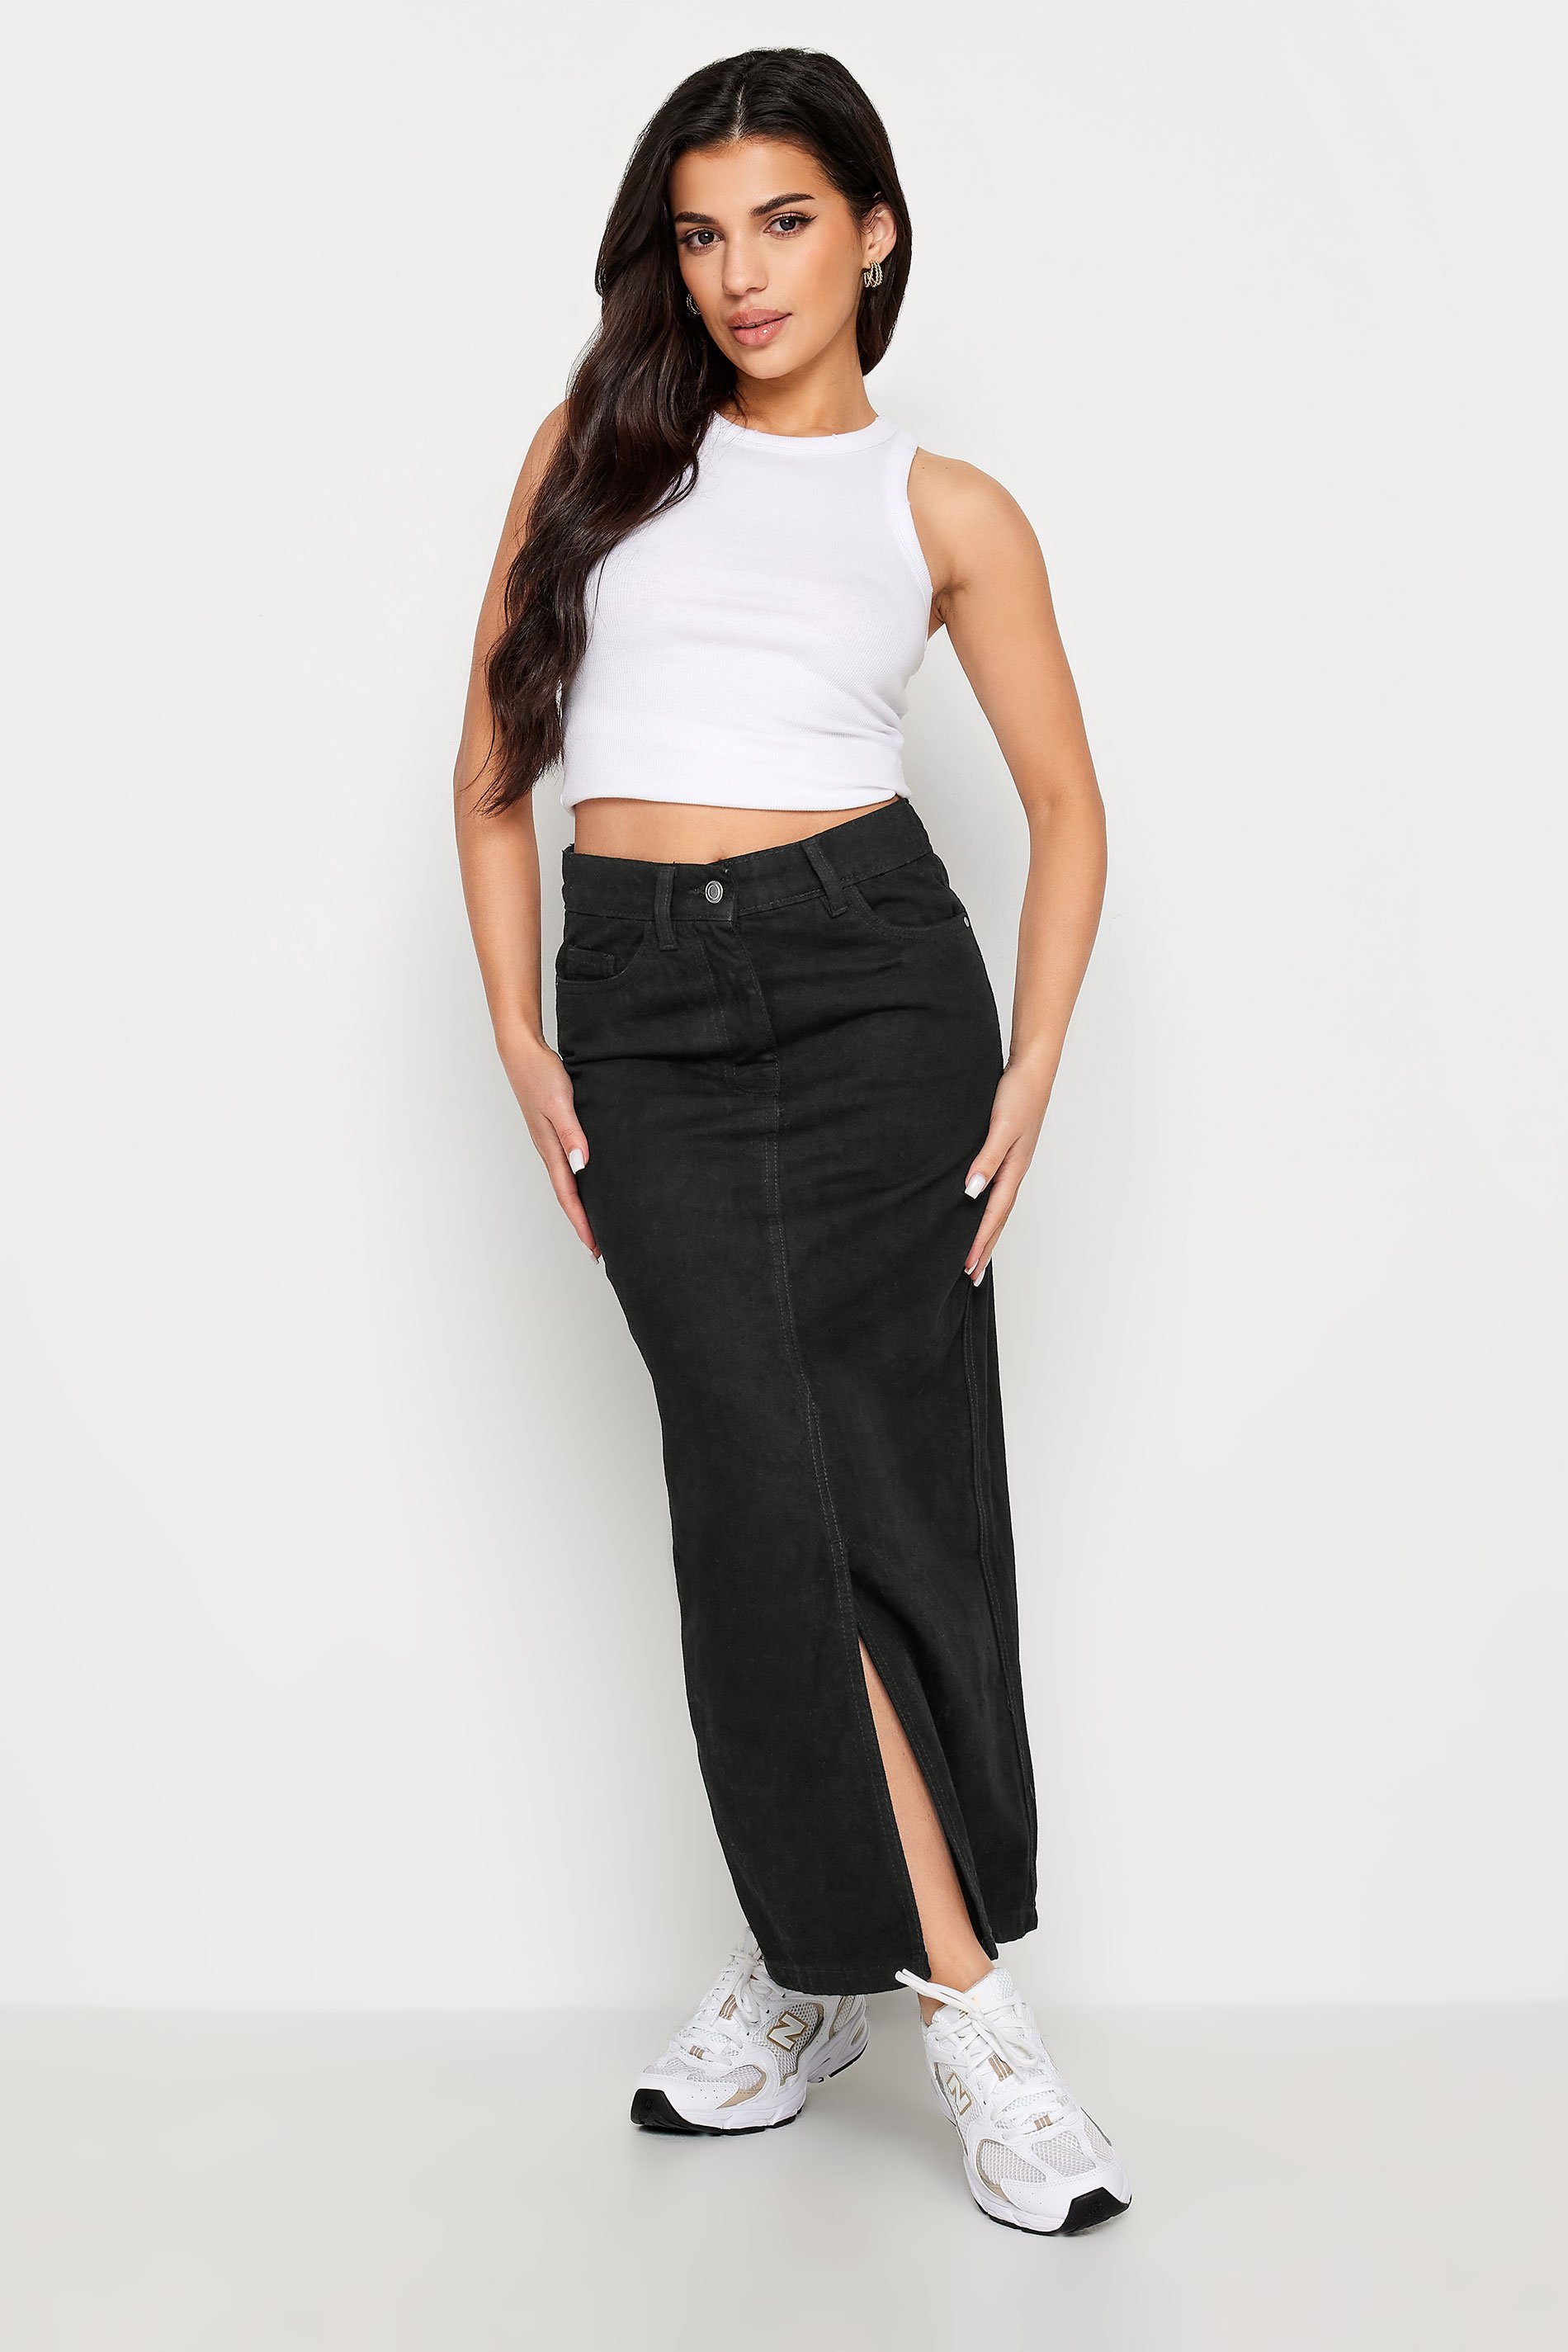 PixieGirl Petite Womens Black Denim Split Maxi Skirt | PixieGirl  1